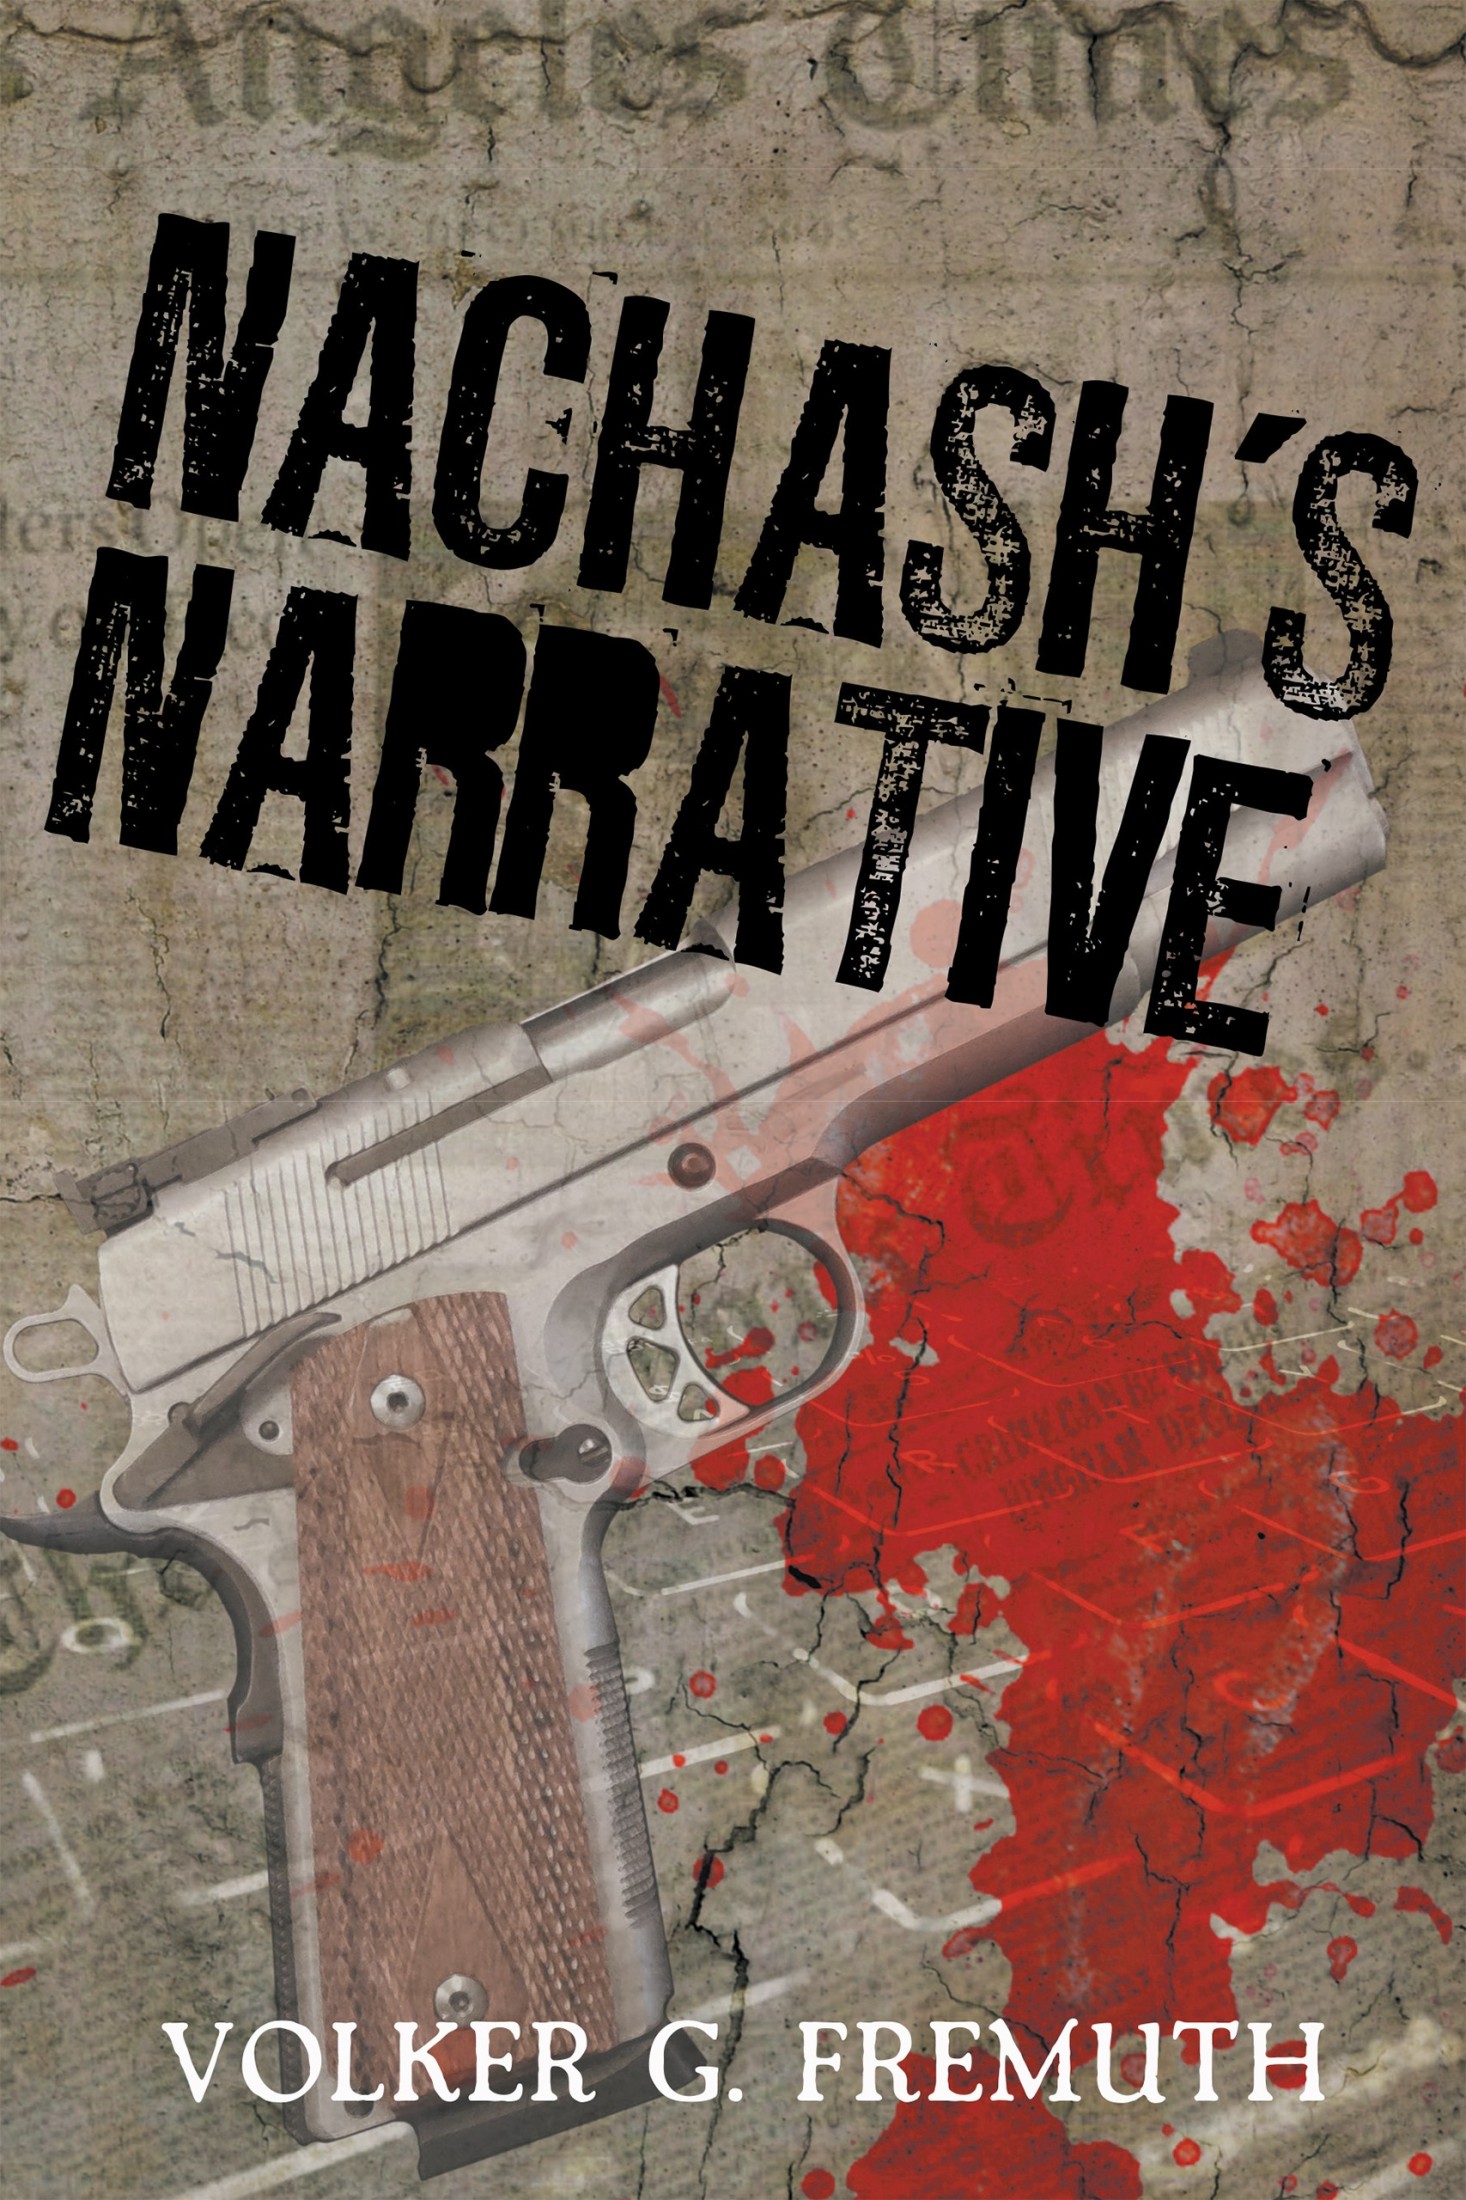 Volker Fremuth’s “Nachash’s Narrative” becomes #1 Amazon Best Seller